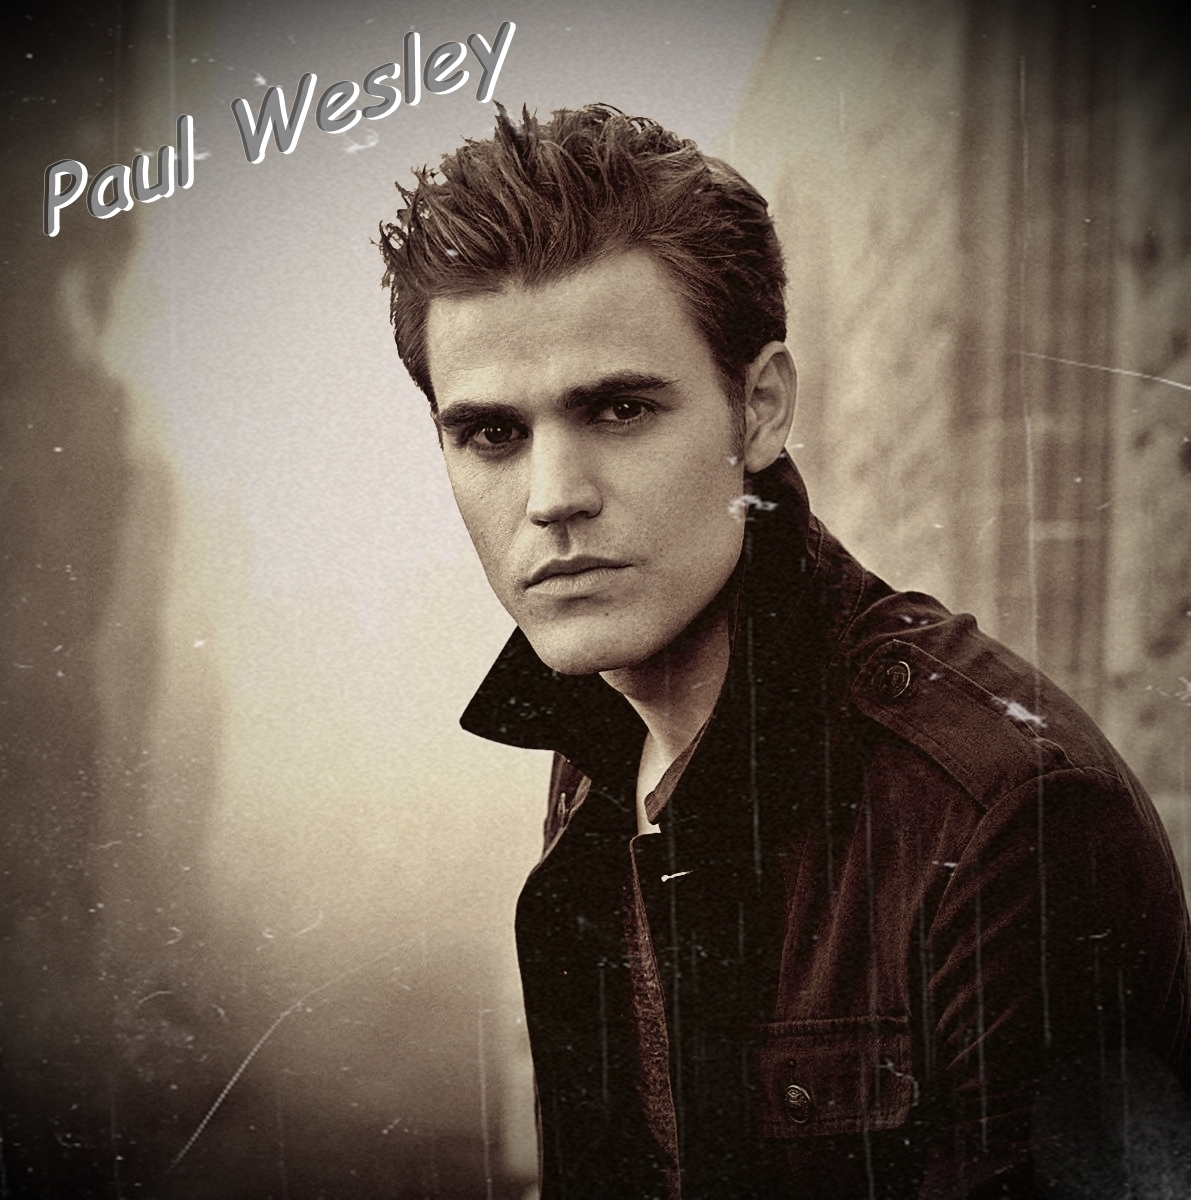 Paul Wesley - Paul Wesley Photo (15977905) - Fanpop